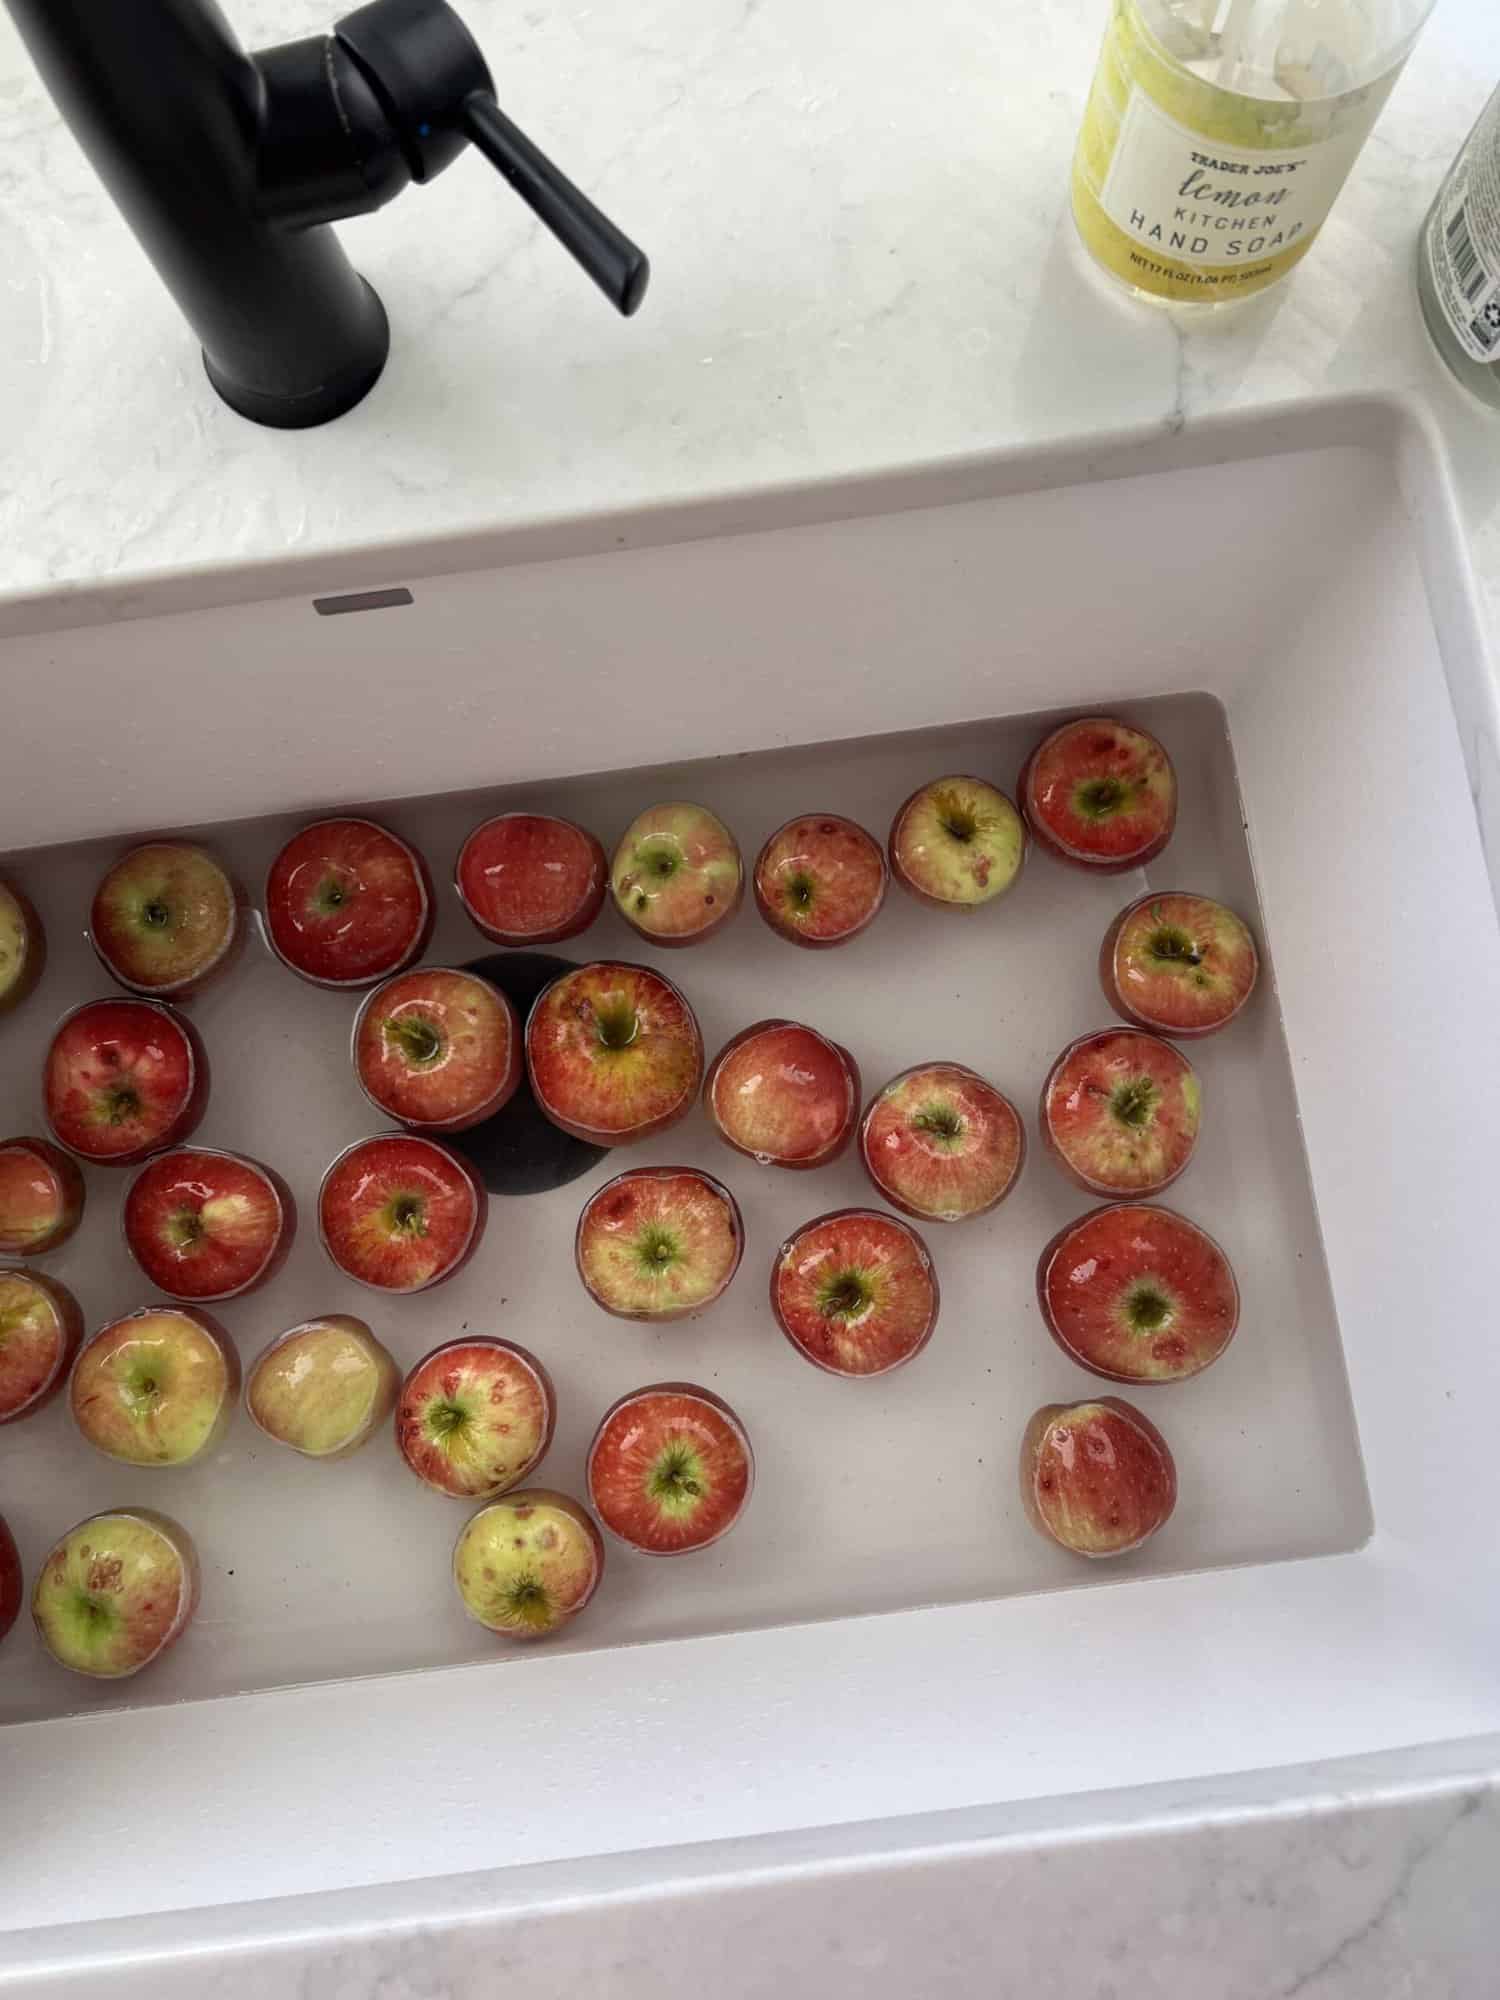 Apples floating in kitchen sink